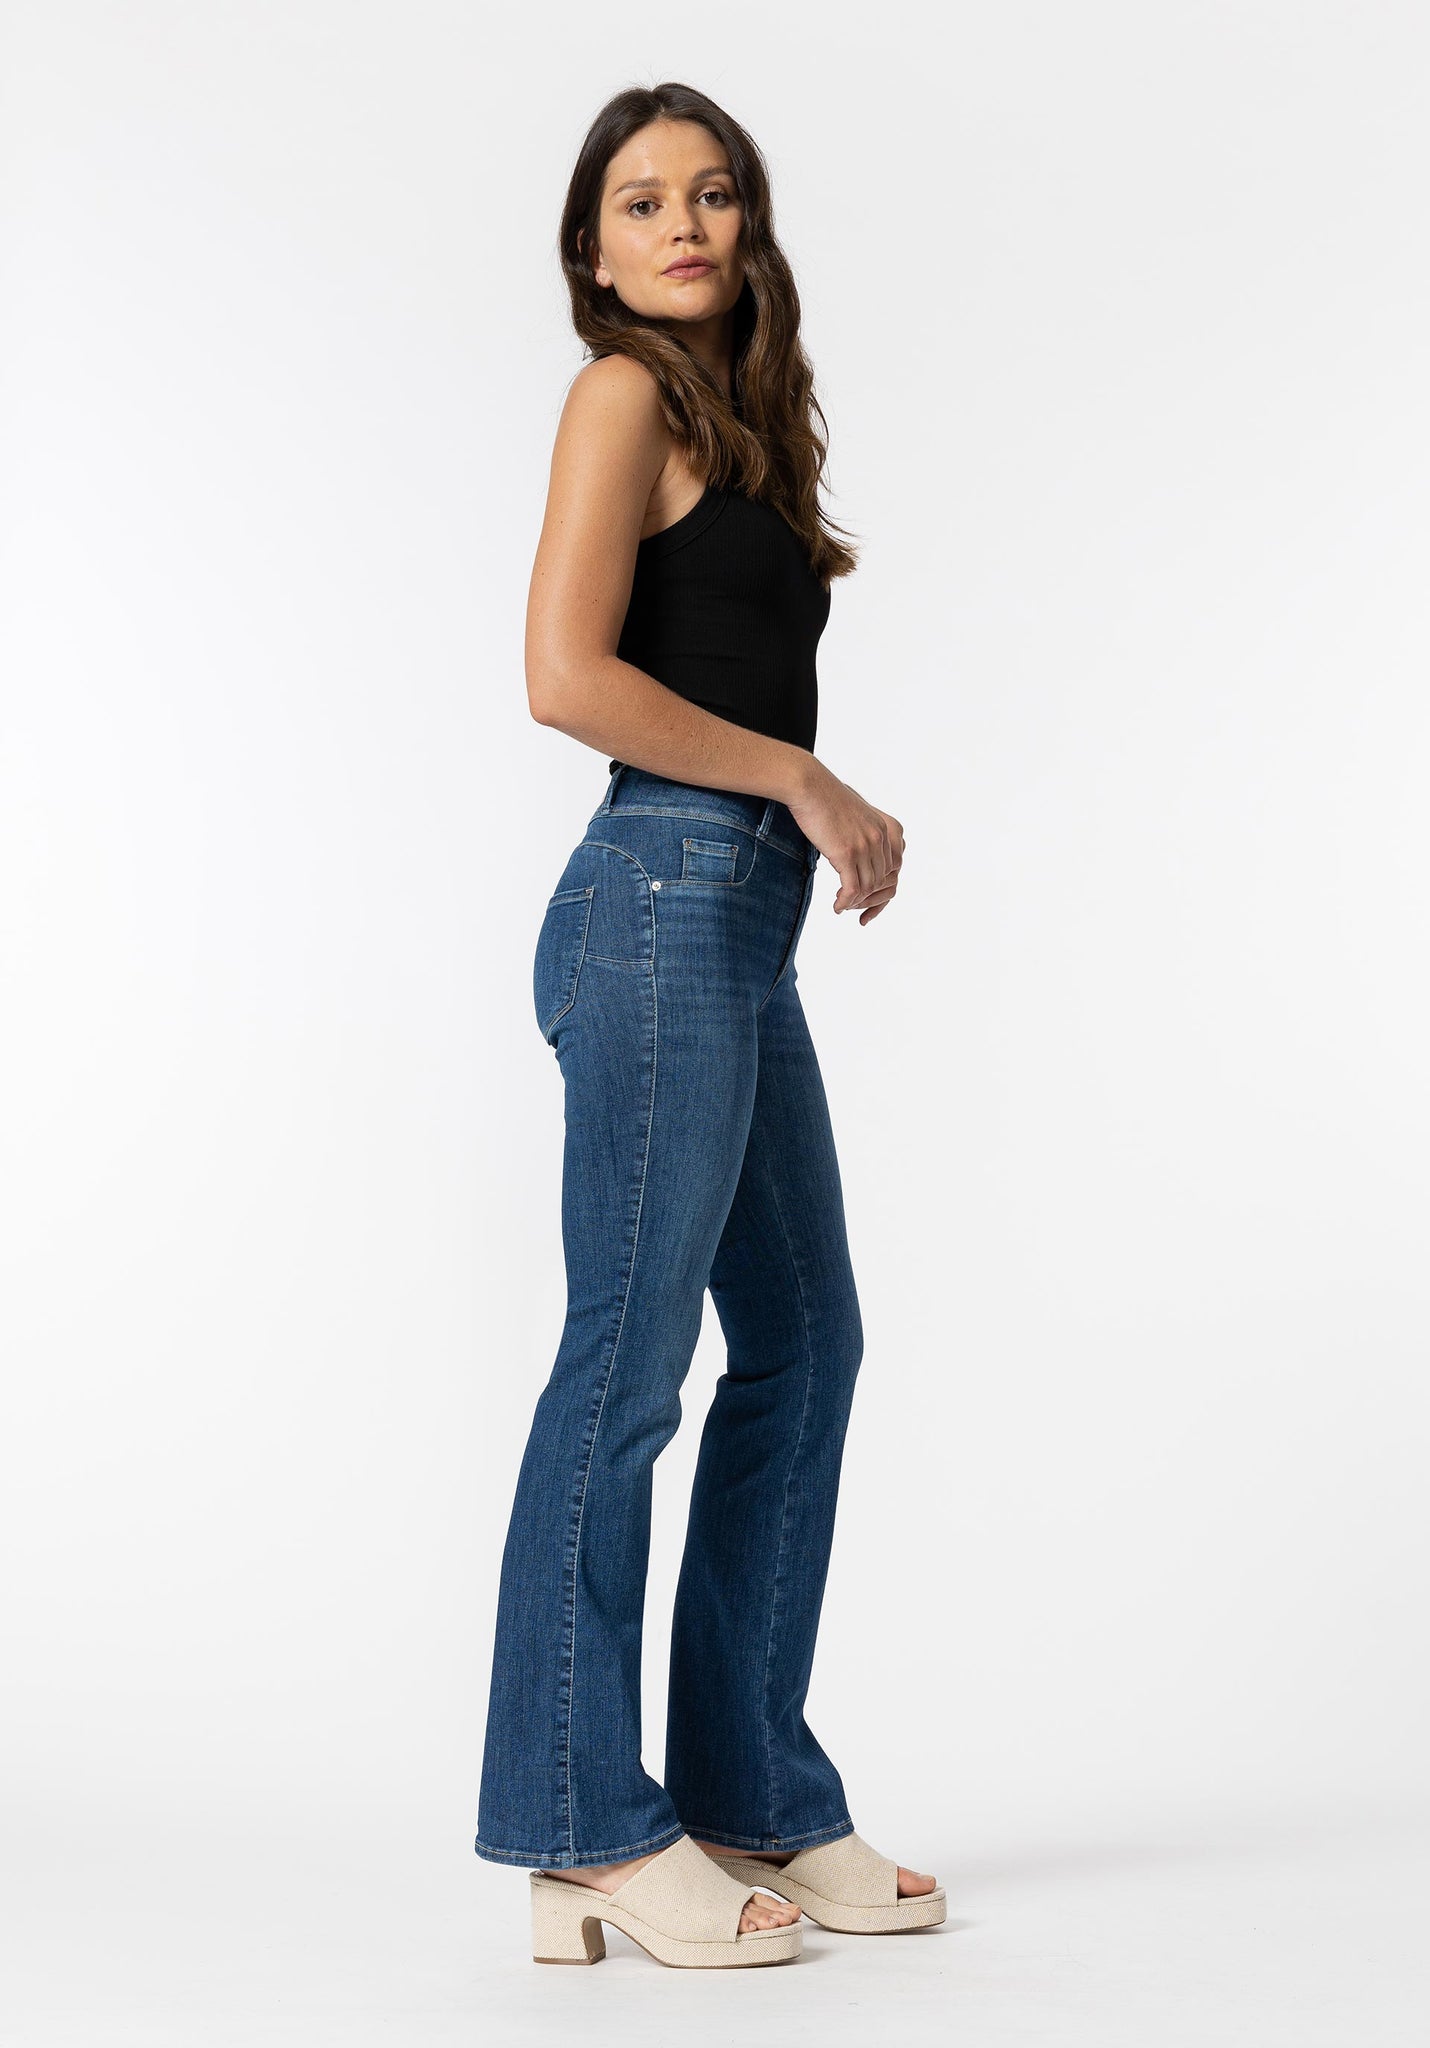 Tiffosi Silhouette Jeans, Einheitsgröße, mittlerer Ton